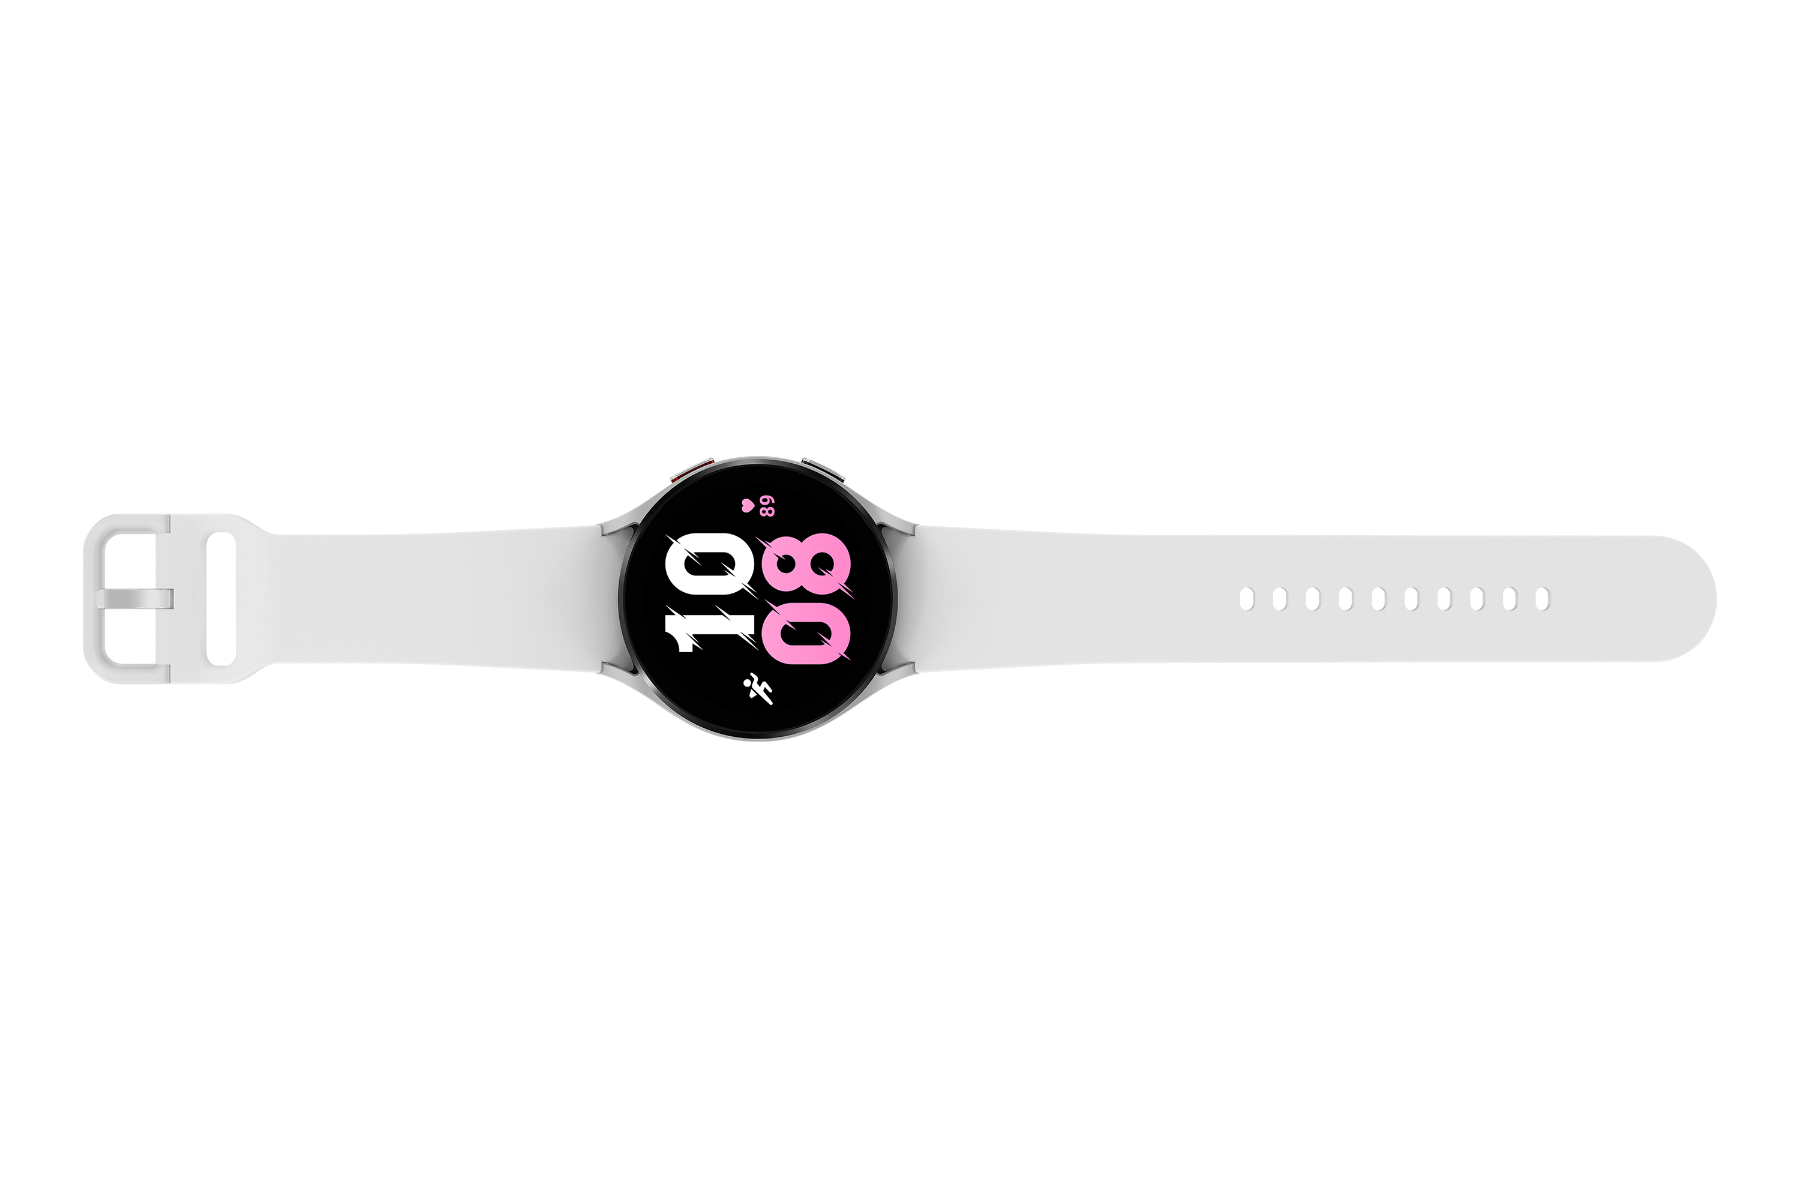 Смарт-часы Samsung Galaxy Watch 5 44mm Silver (SM-R910NZSA)